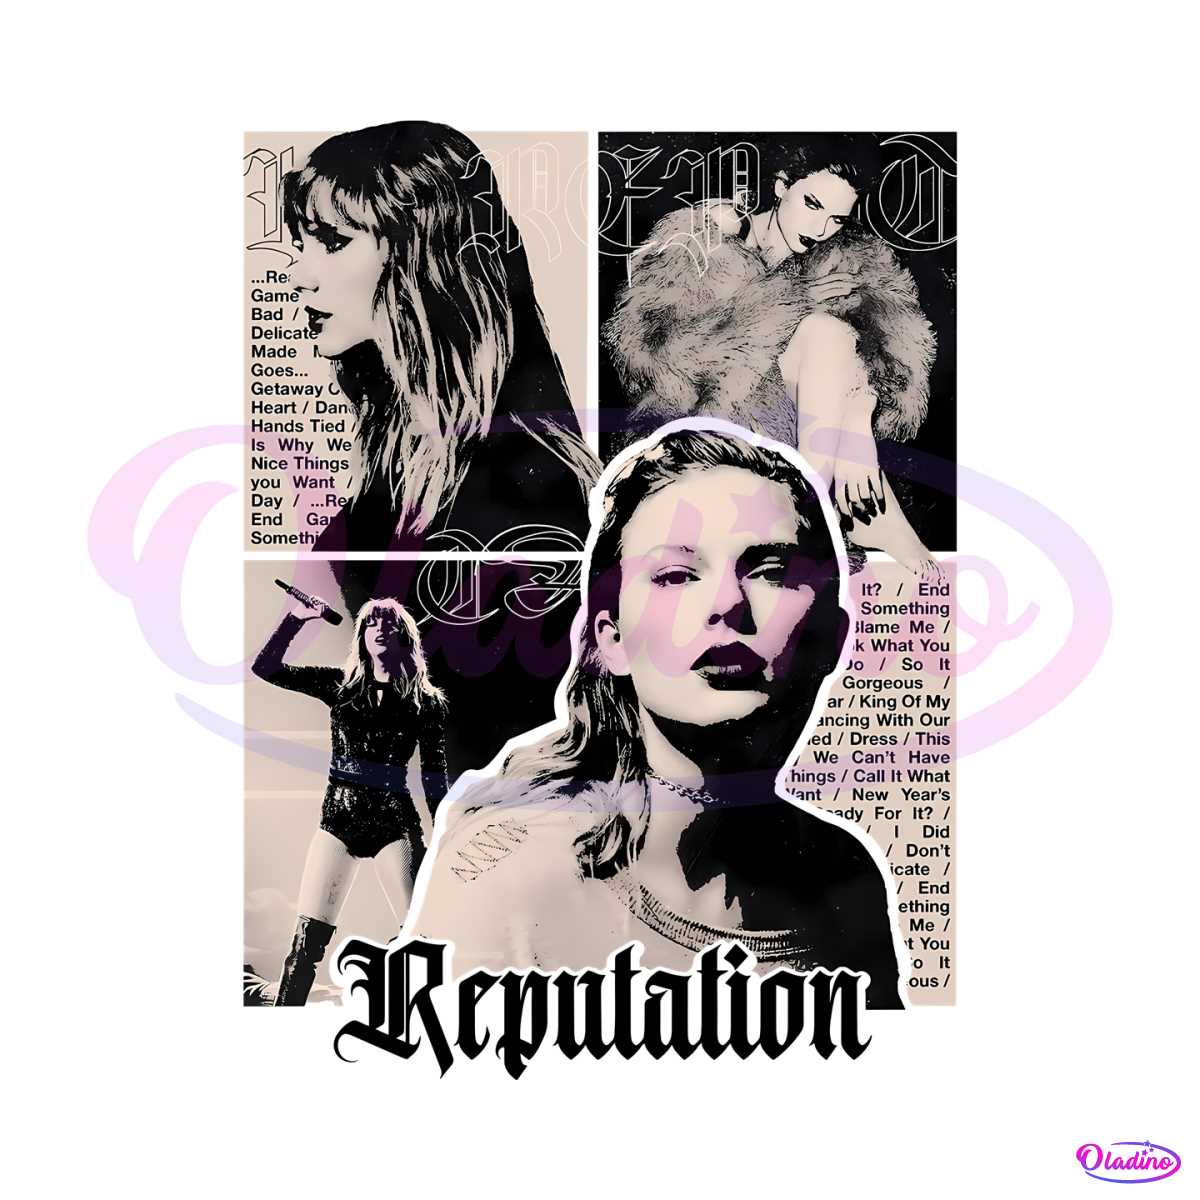 Taylor Swift - Reputation - CD